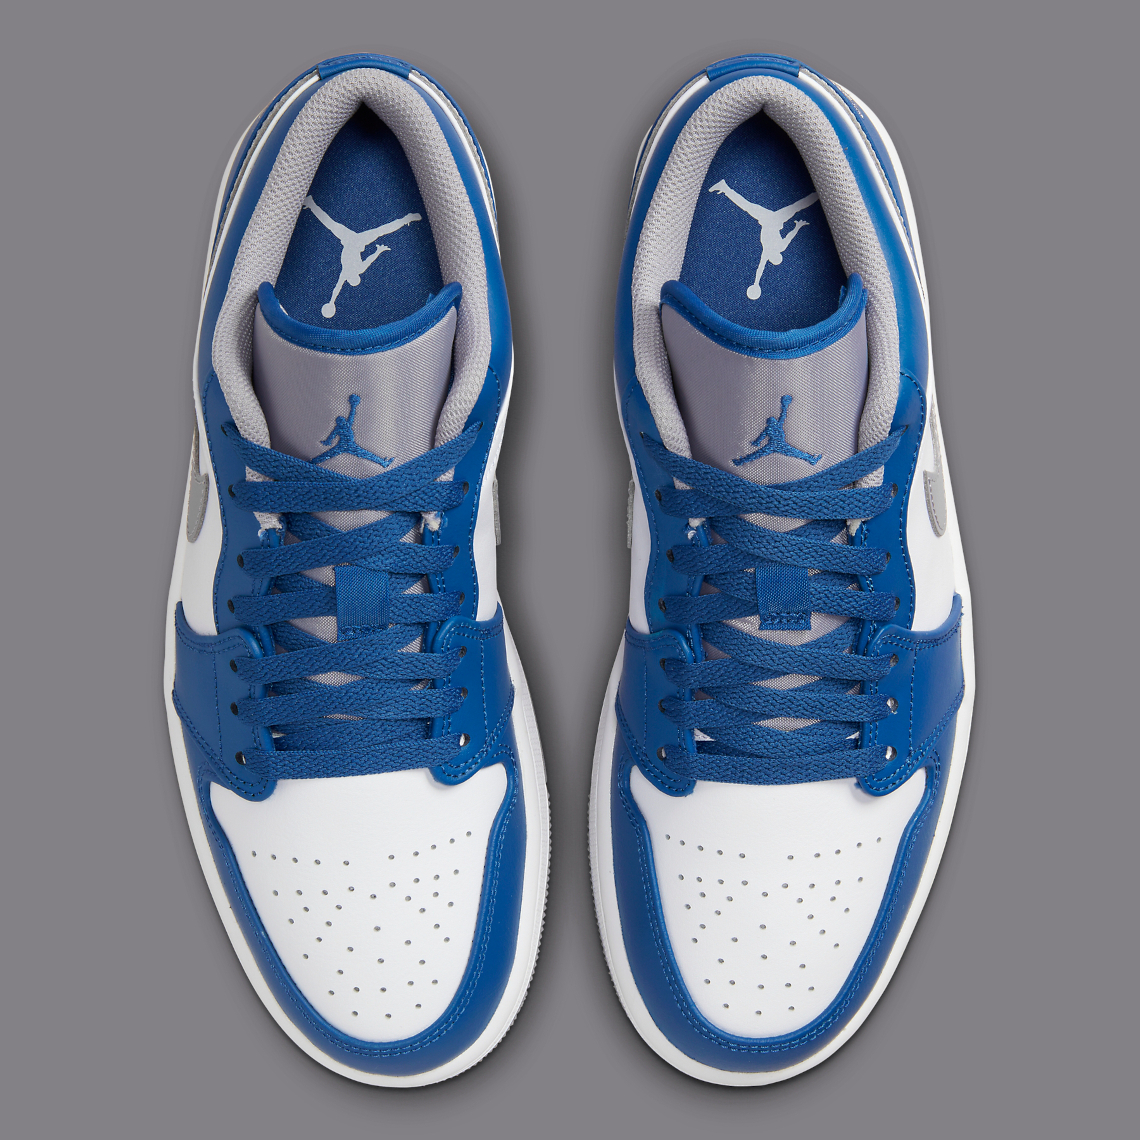 Official Look At The Air Jordan 1 Low True Blue